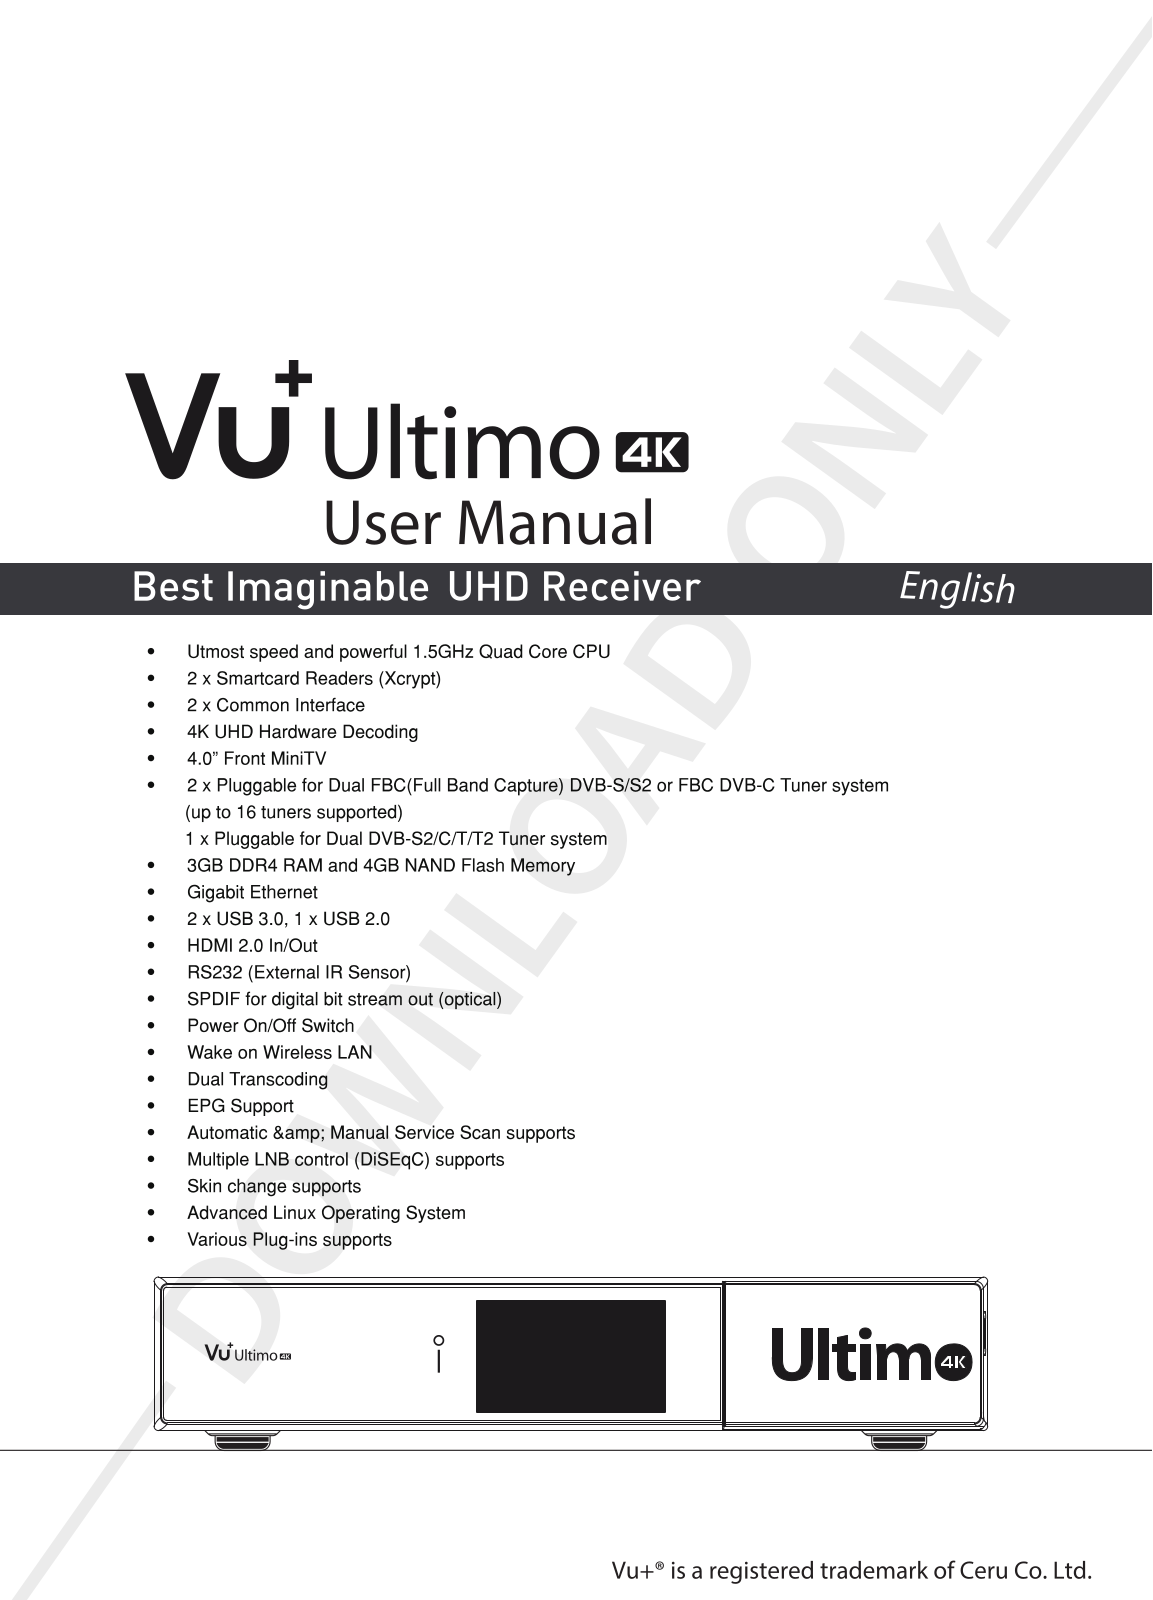 VU+ Ultimo 4K User Manual